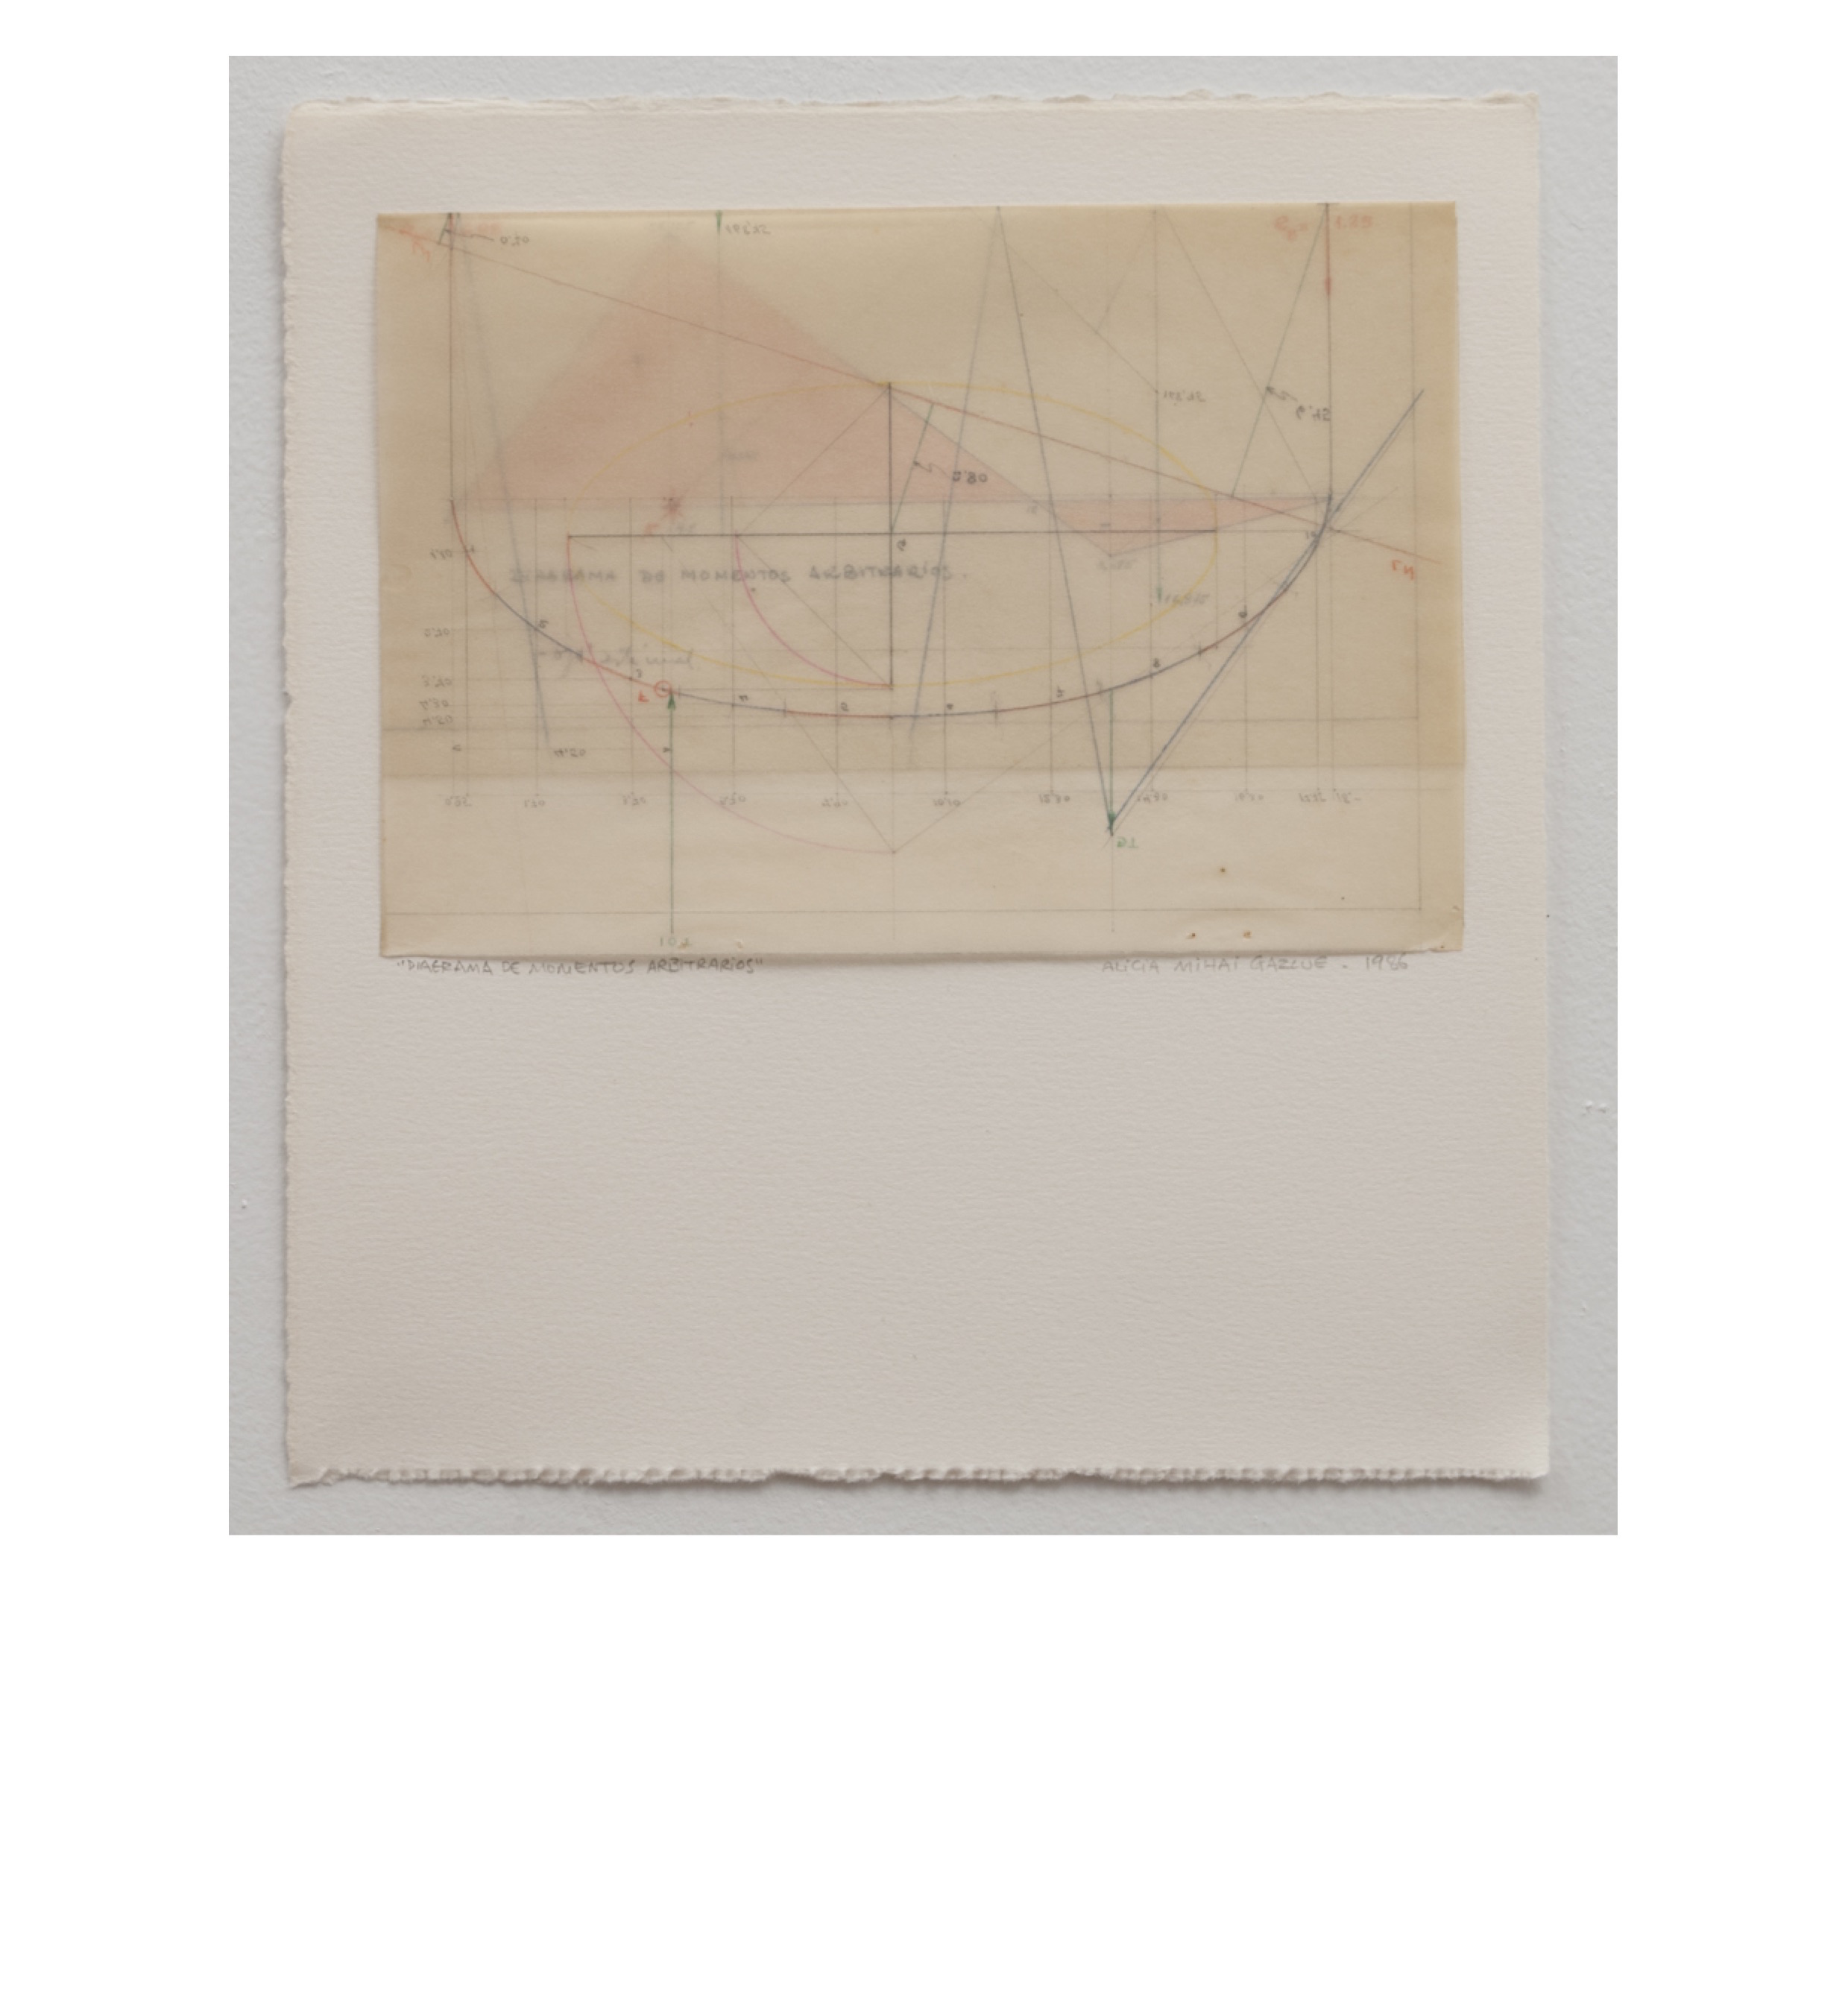 Alicia Mihai Gazcue - Diagrama de momentos arbitrarios (Diagram of arbitrary moments). 1986. Lápiz sobre papel de calco. 15,24 x 22,22 cm. Único